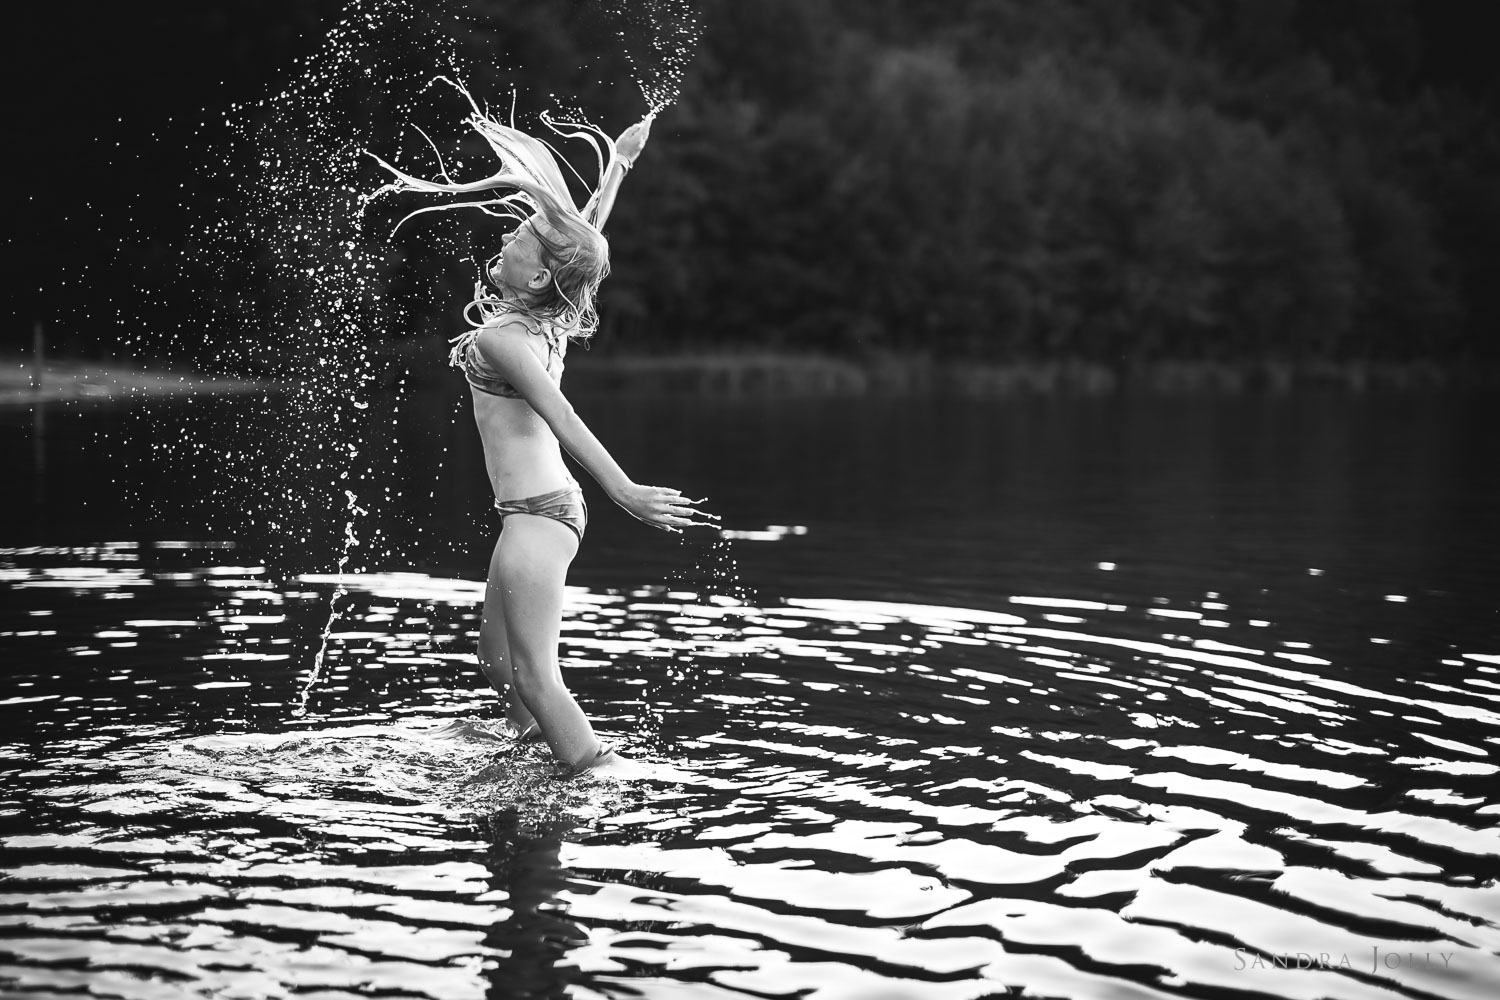 Girl-and-water-spray-by-Stockholm-barnfotograf-Sandra-Jolly.jpg